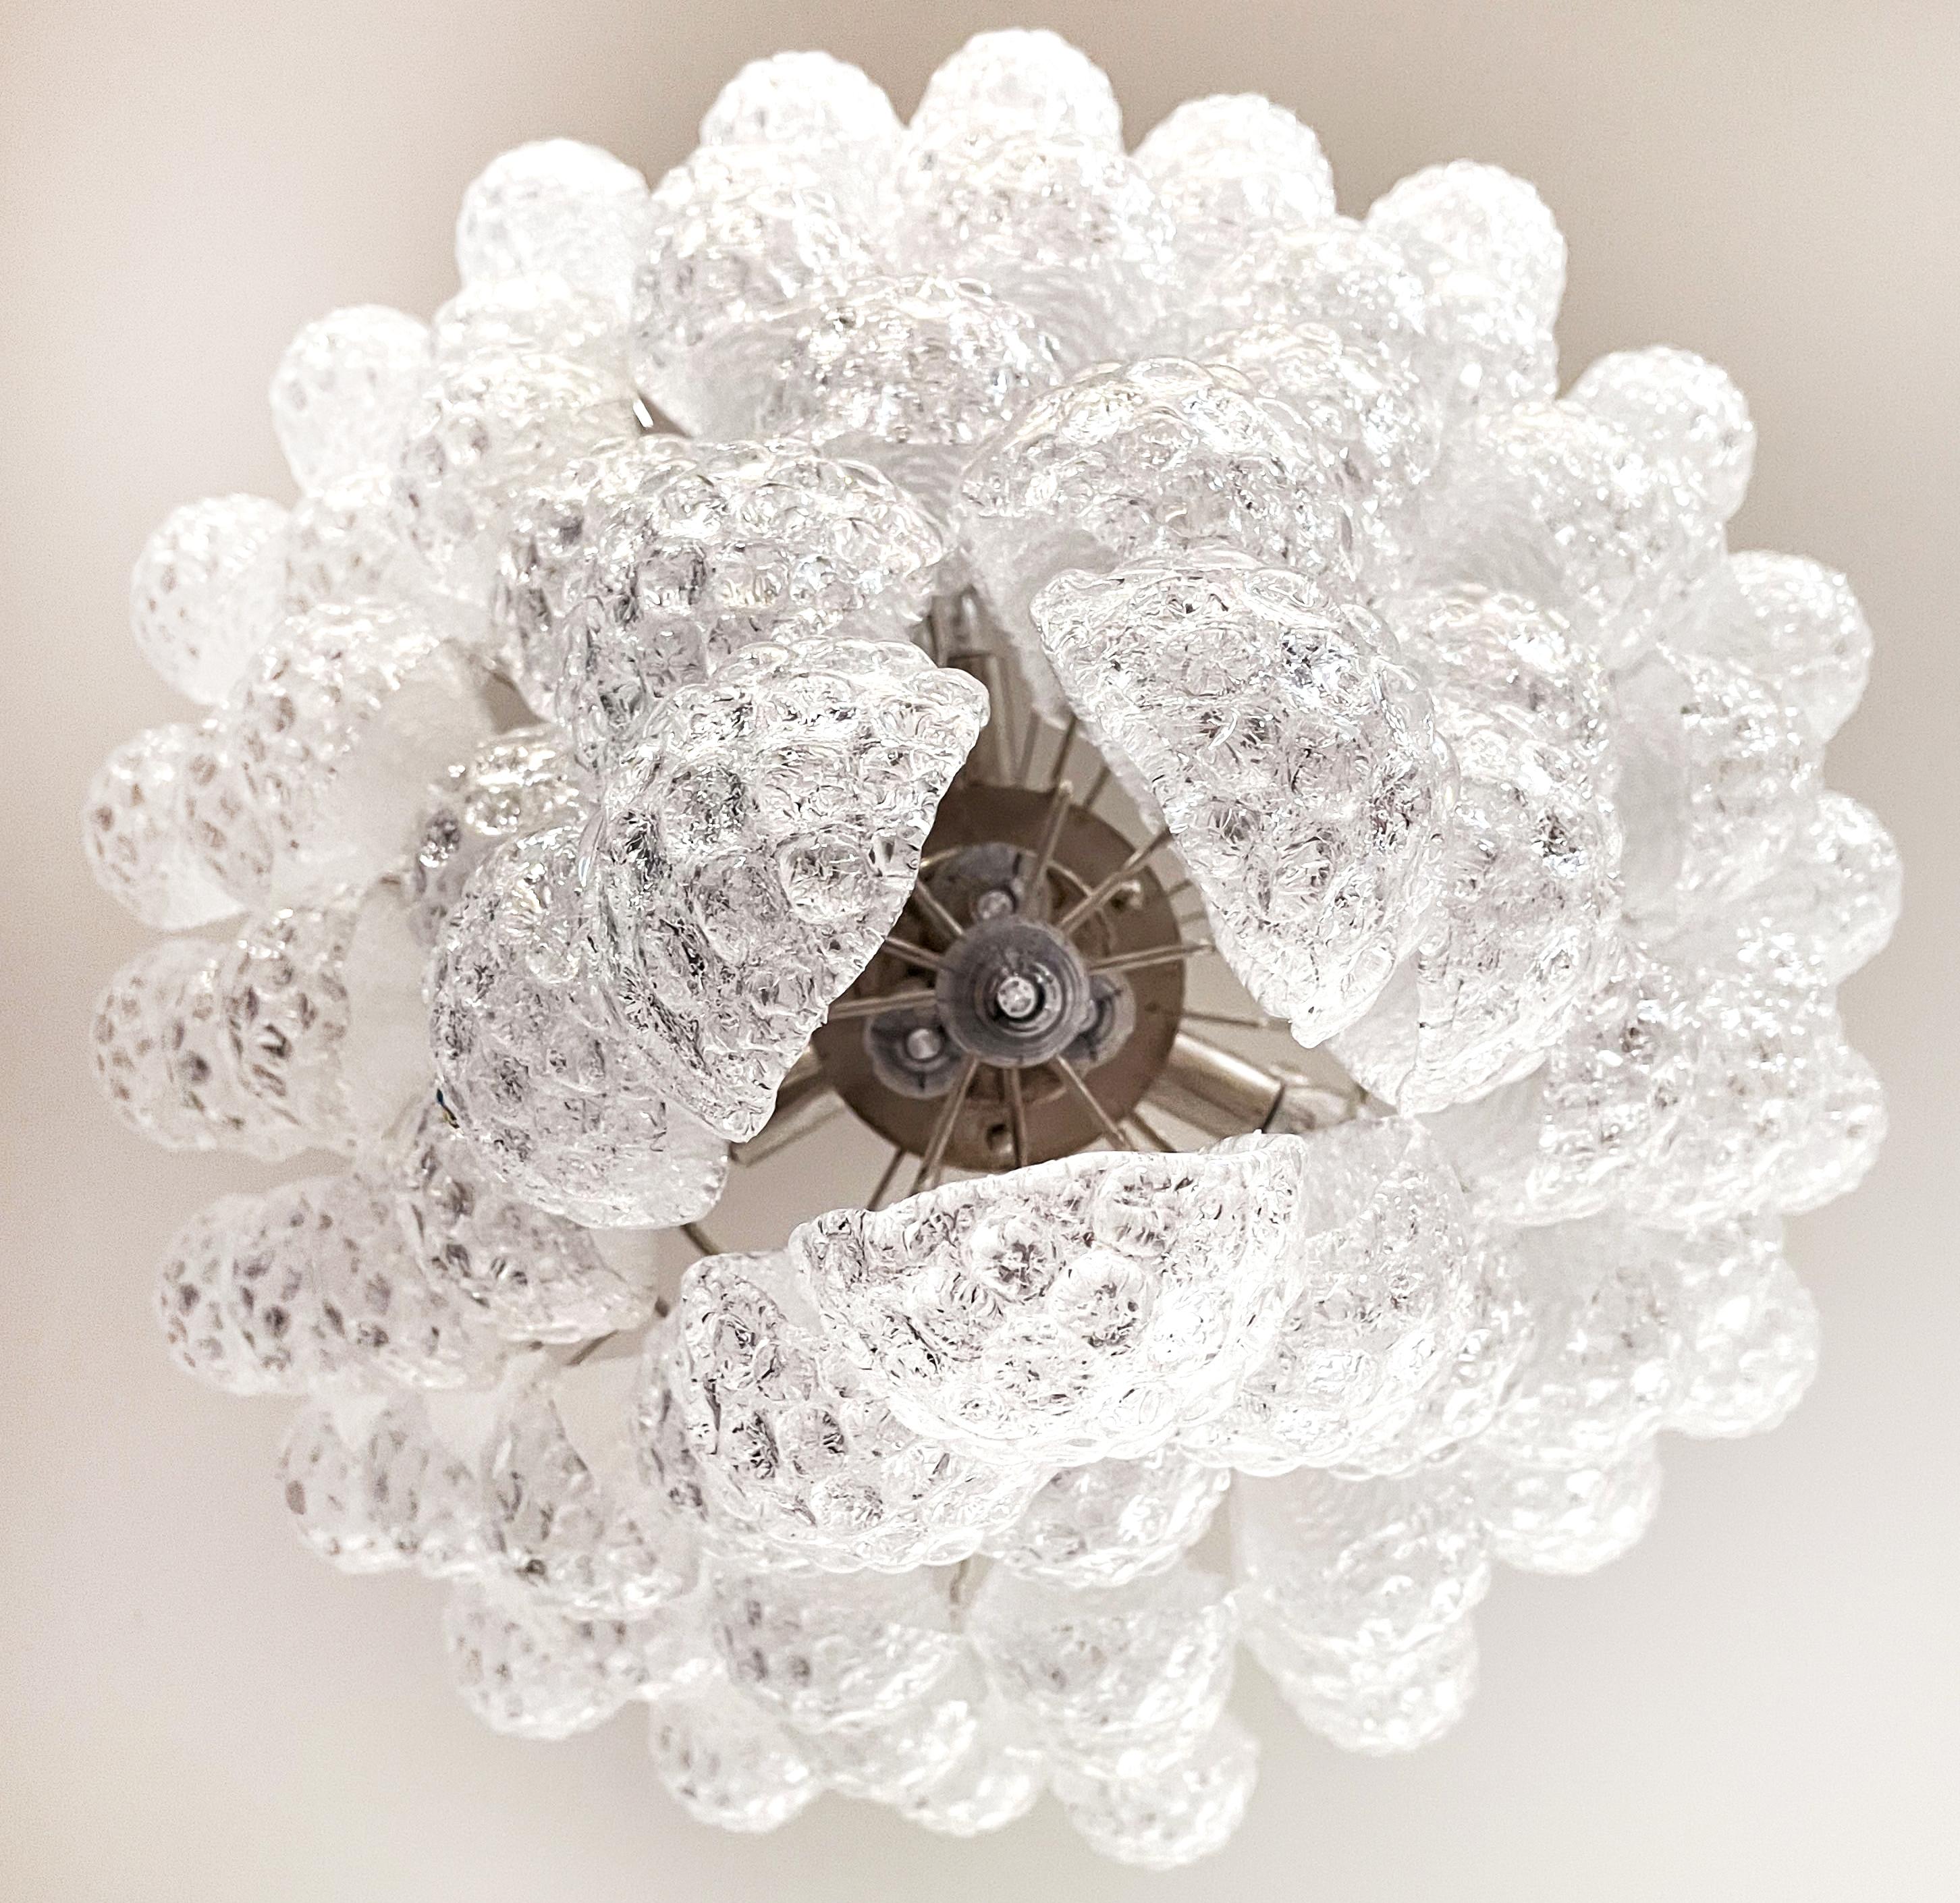 Magnificent Italian vintage Murano glass chandelier - 75 glass petals drop For Sale 8